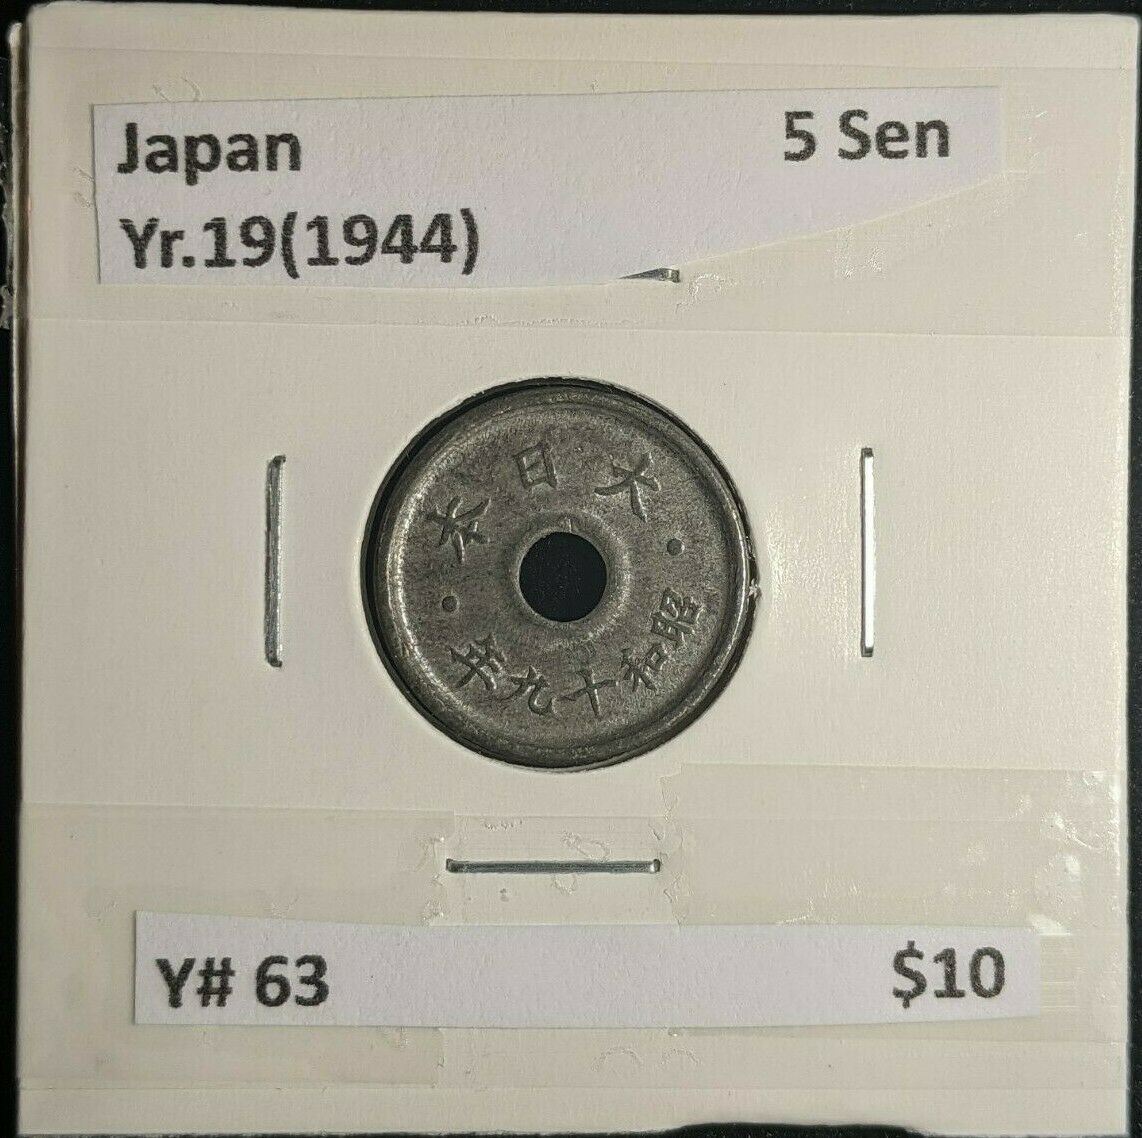 Japan Yr.19(1944) 5 Sen Y# 63 #133  10A